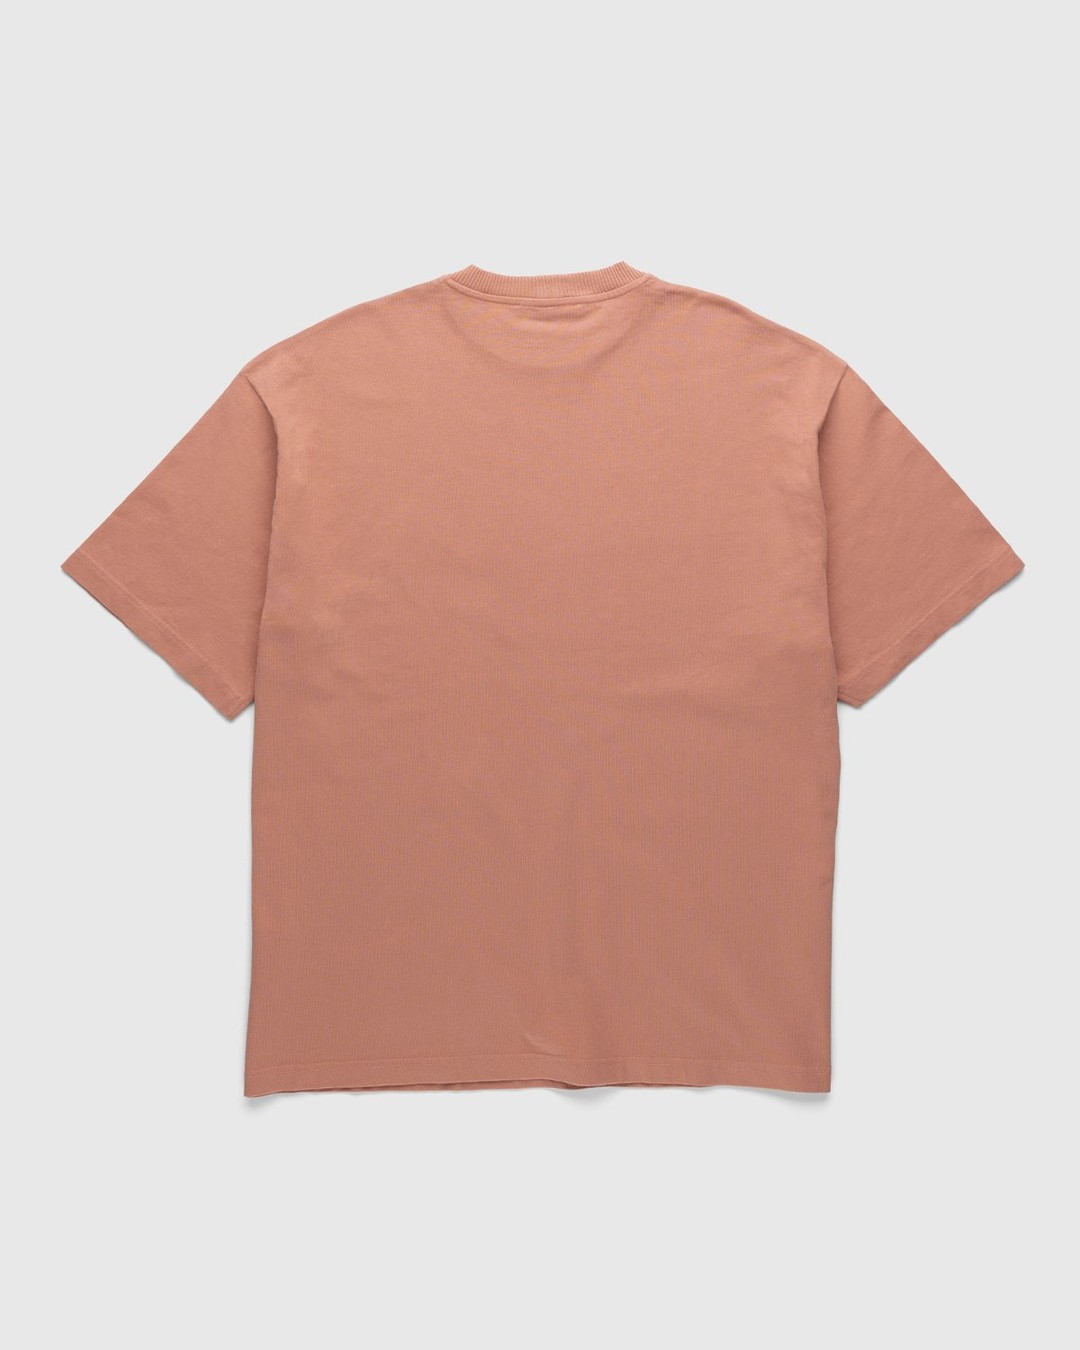 Acne Studios – Cotton Logo T-Shirt Old Pink - Tops - Pink - Image 2